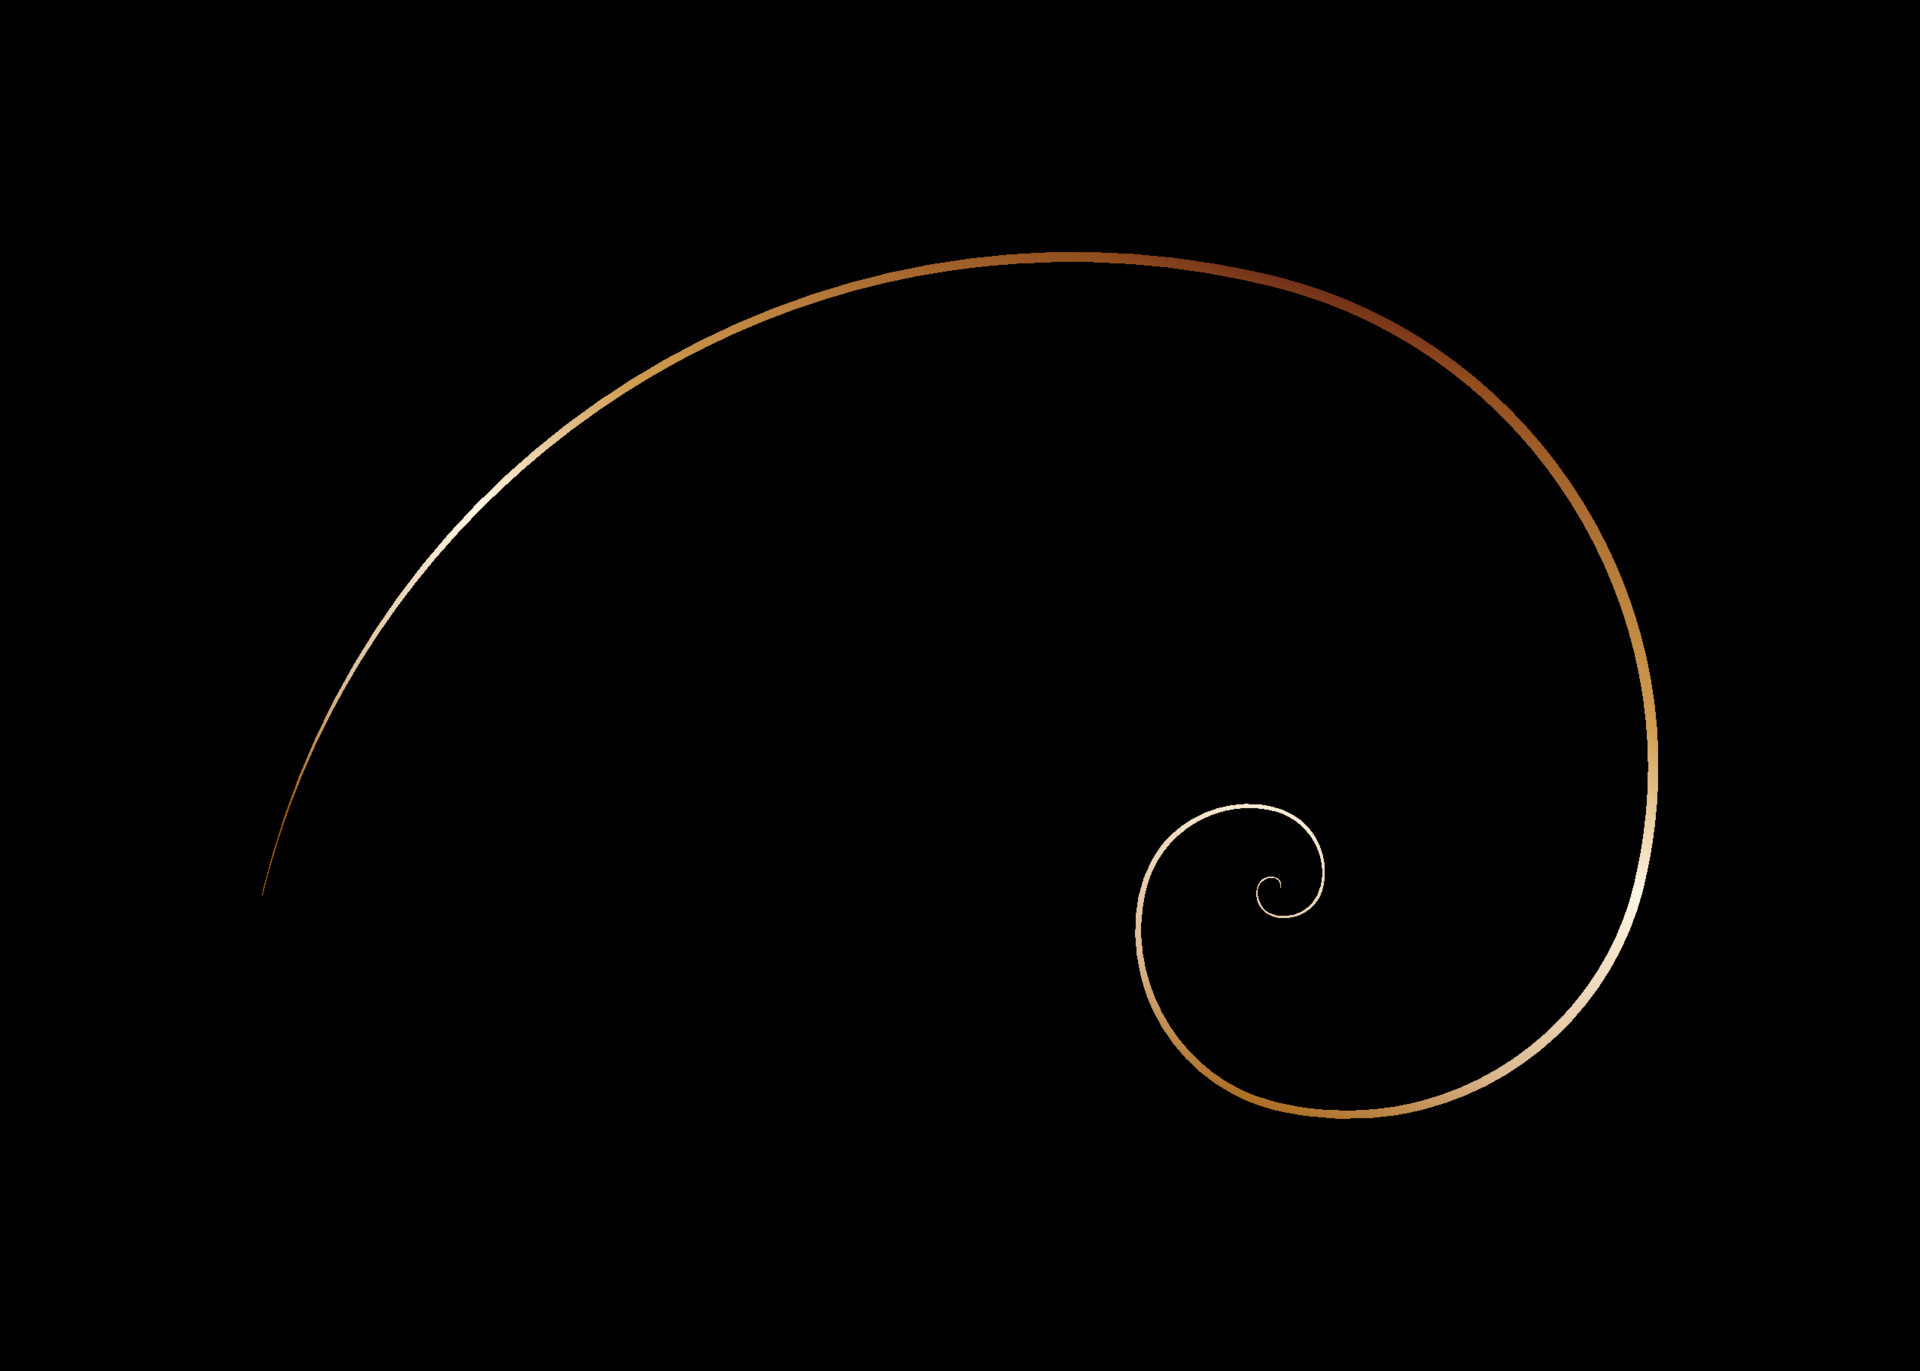 Golden Ratio: Fibonacci spiral, Divine proportion, Nautilus shell, Vector illustration, Minimalistic art. 1920x1380 HD Wallpaper.